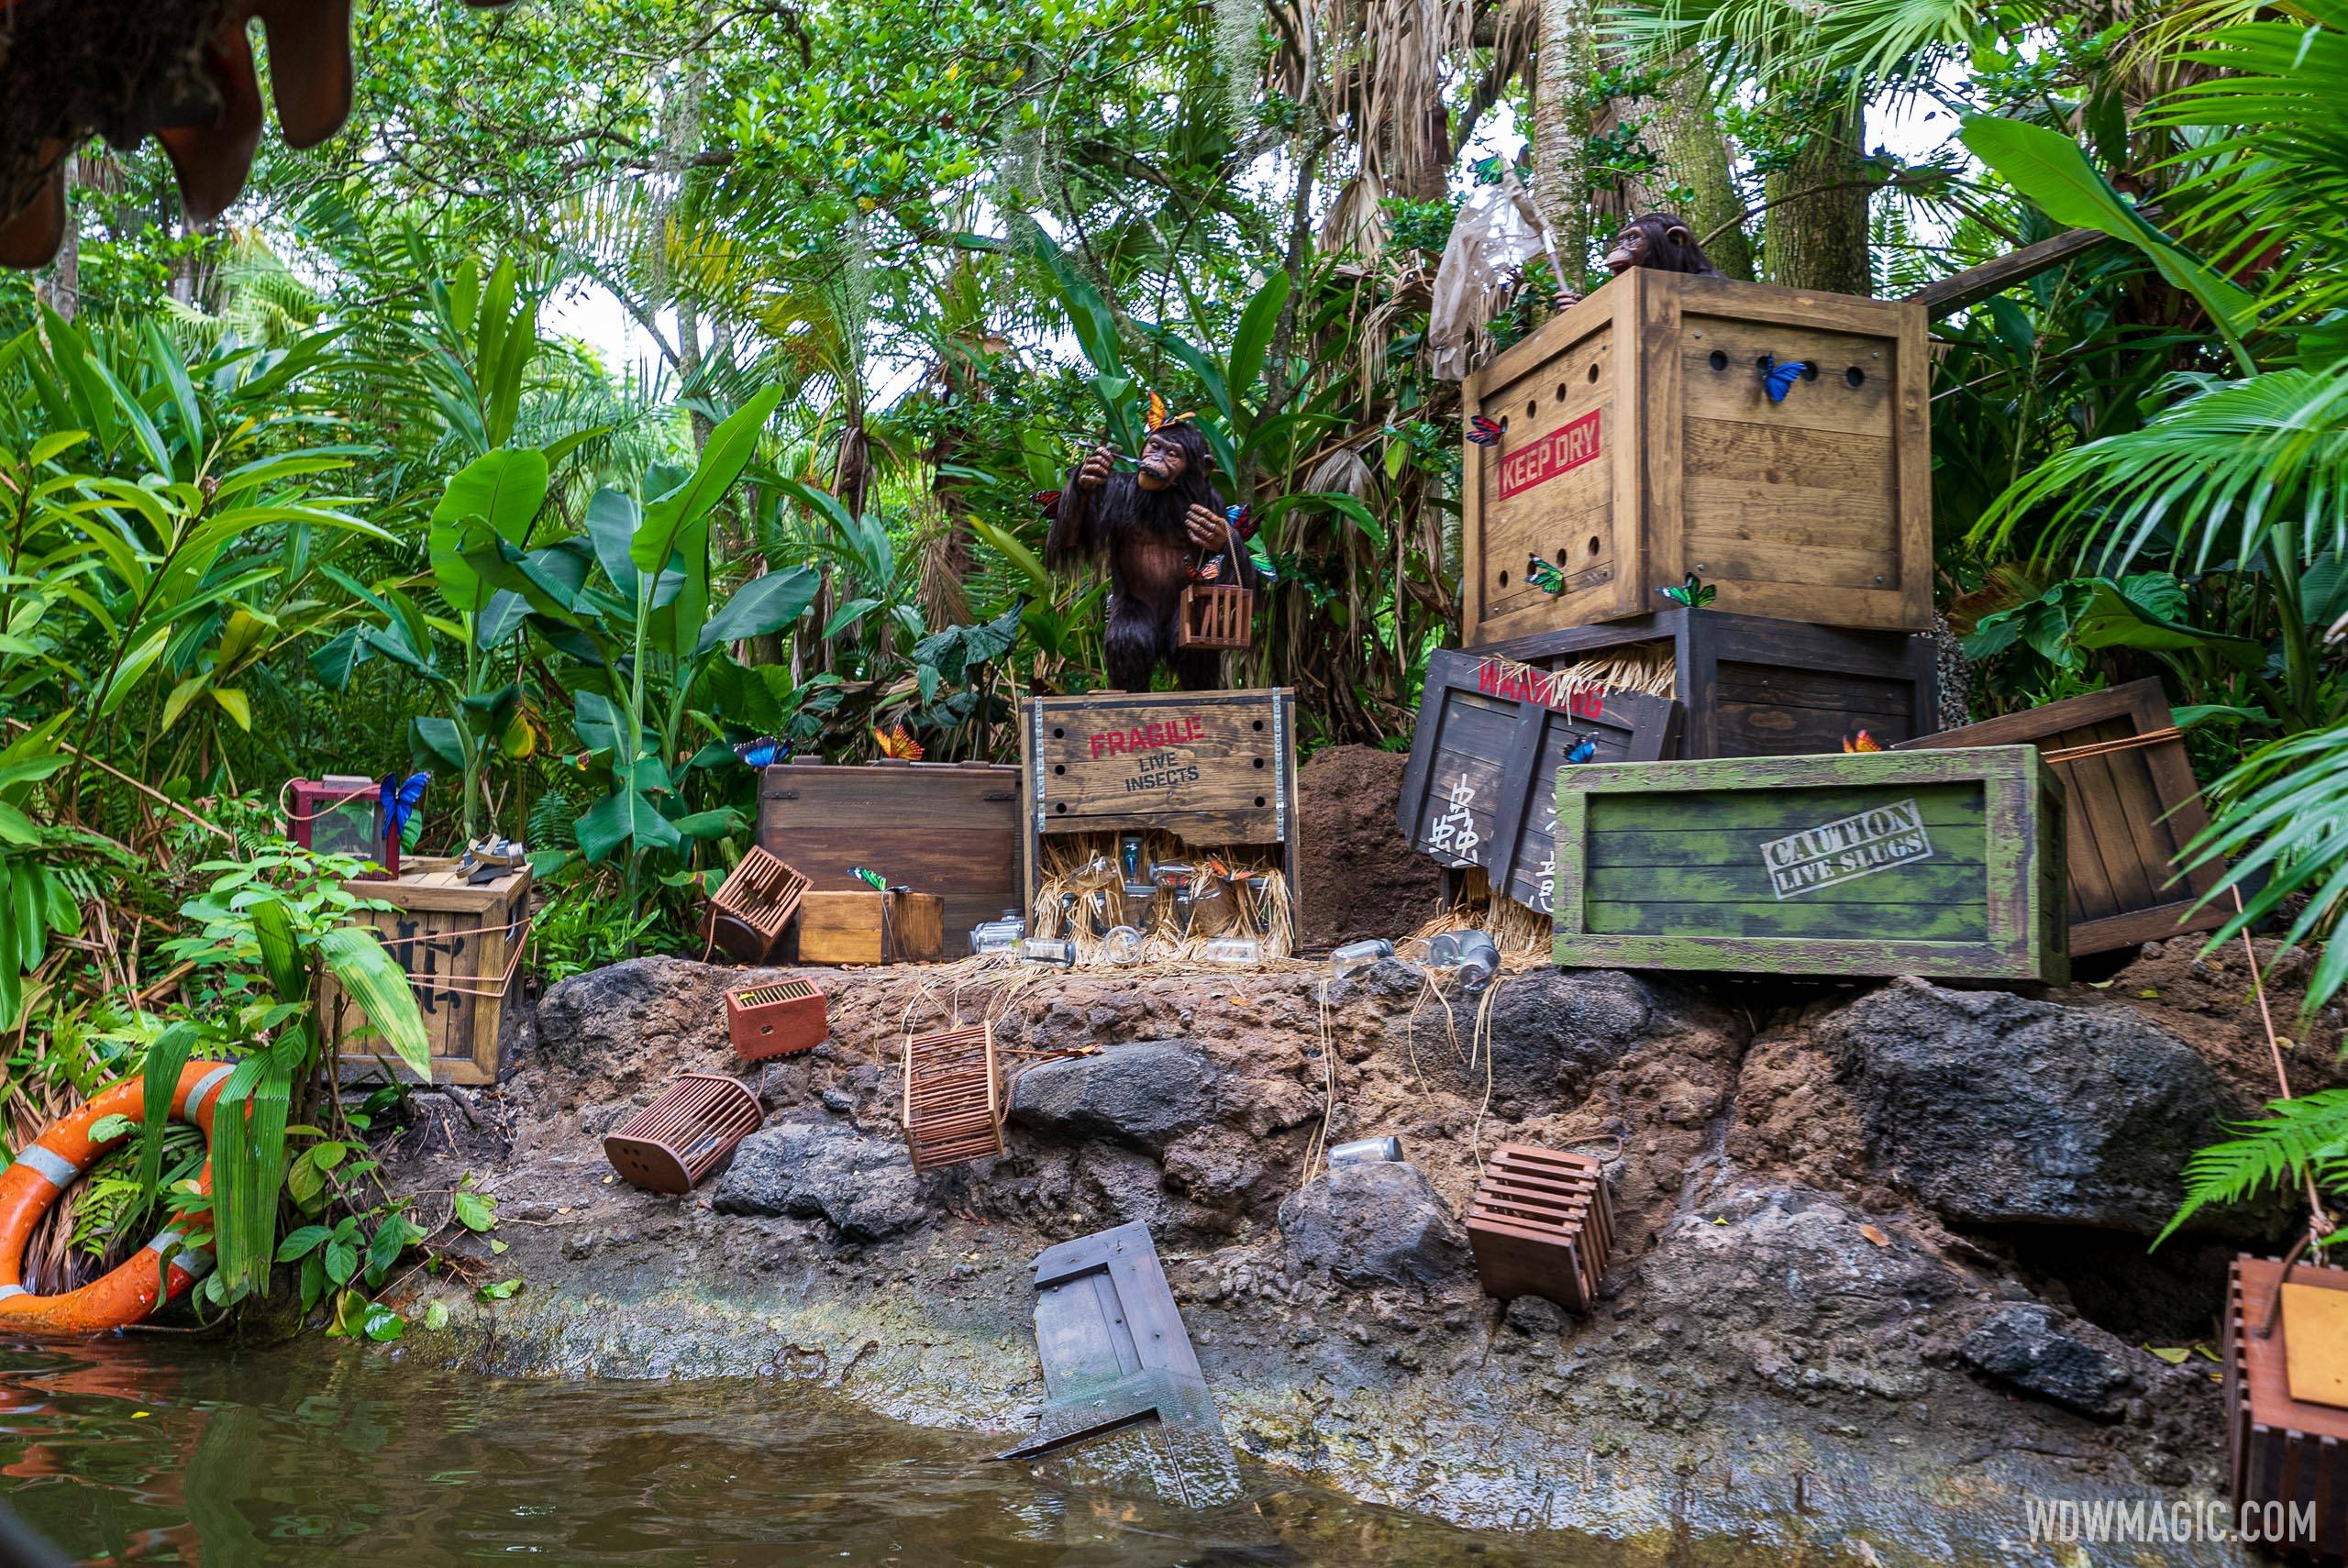 New Jungle Cruise chimp scenes